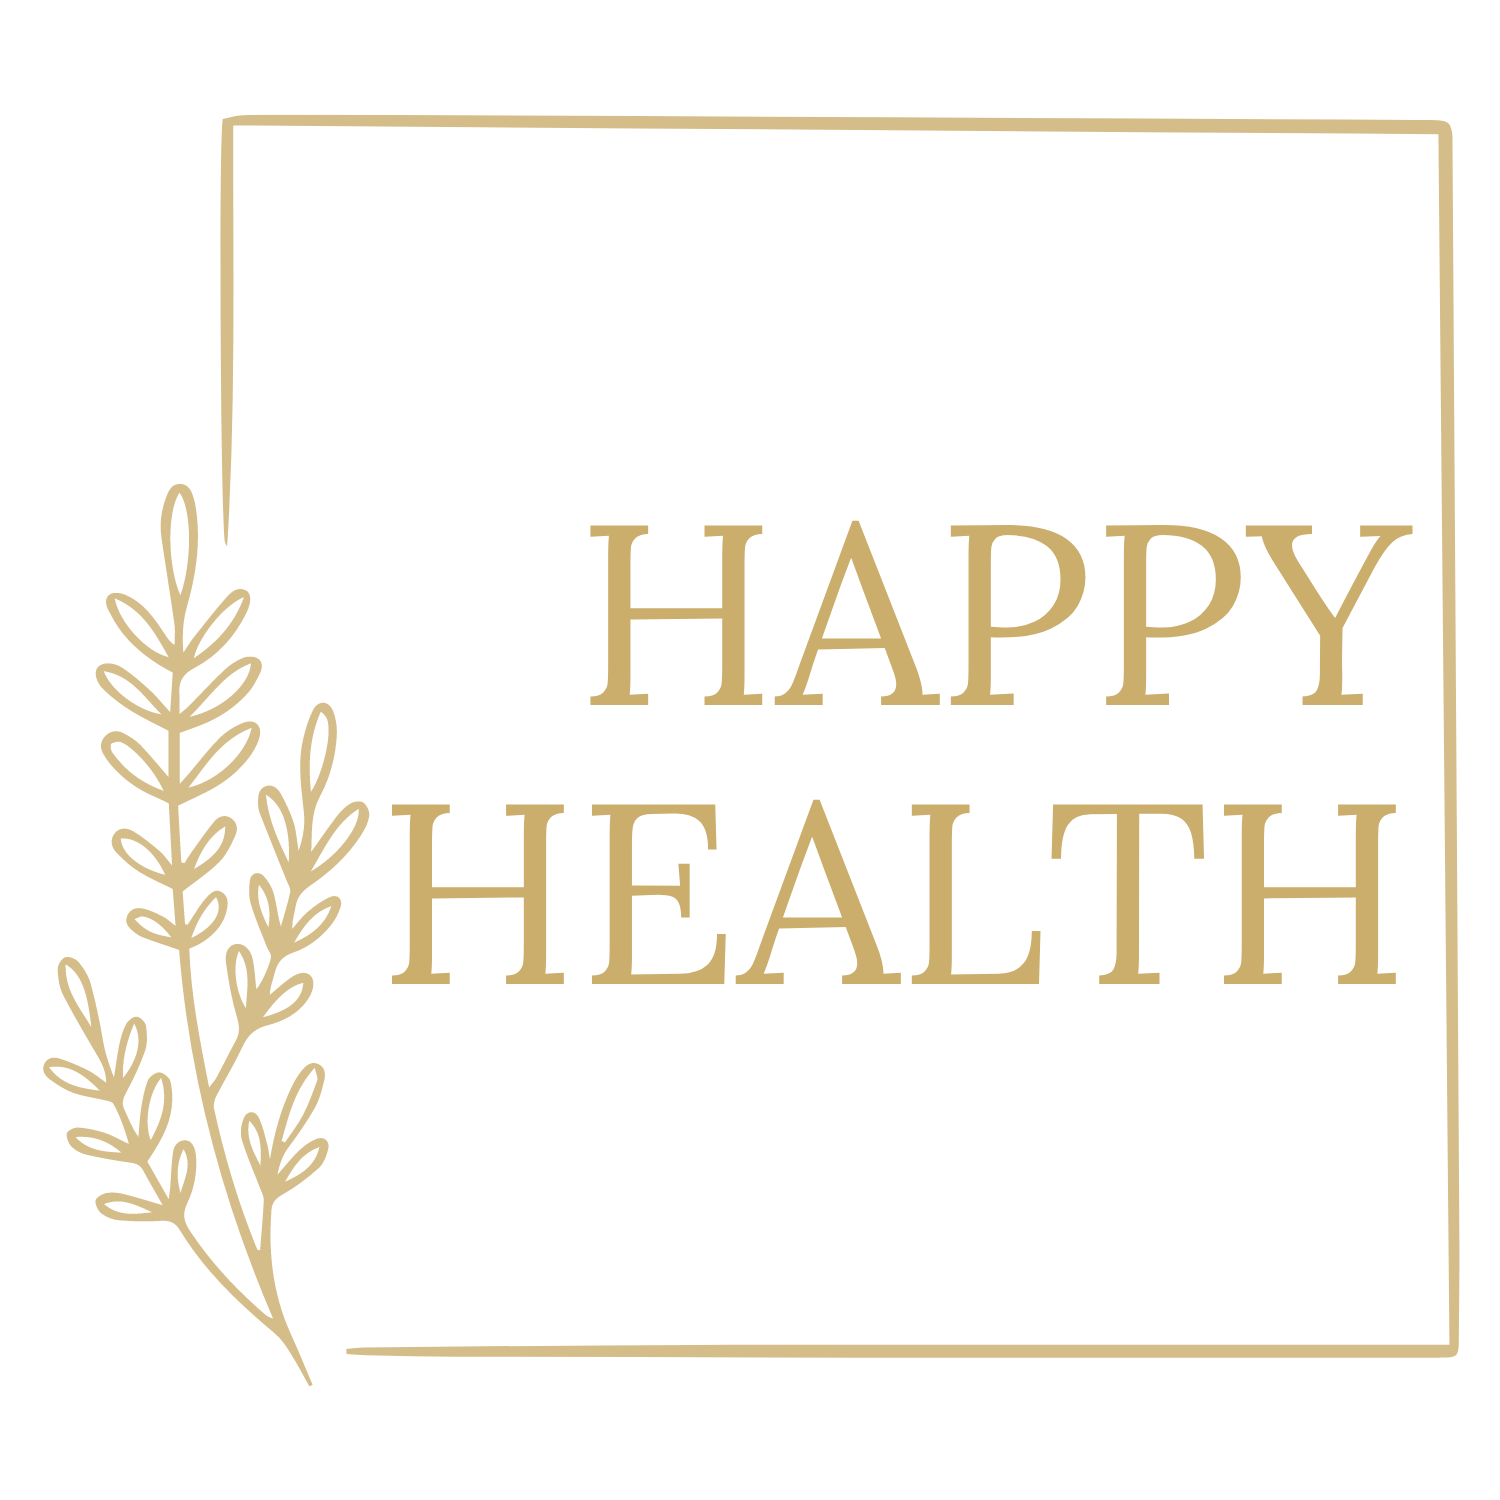 Happy Health